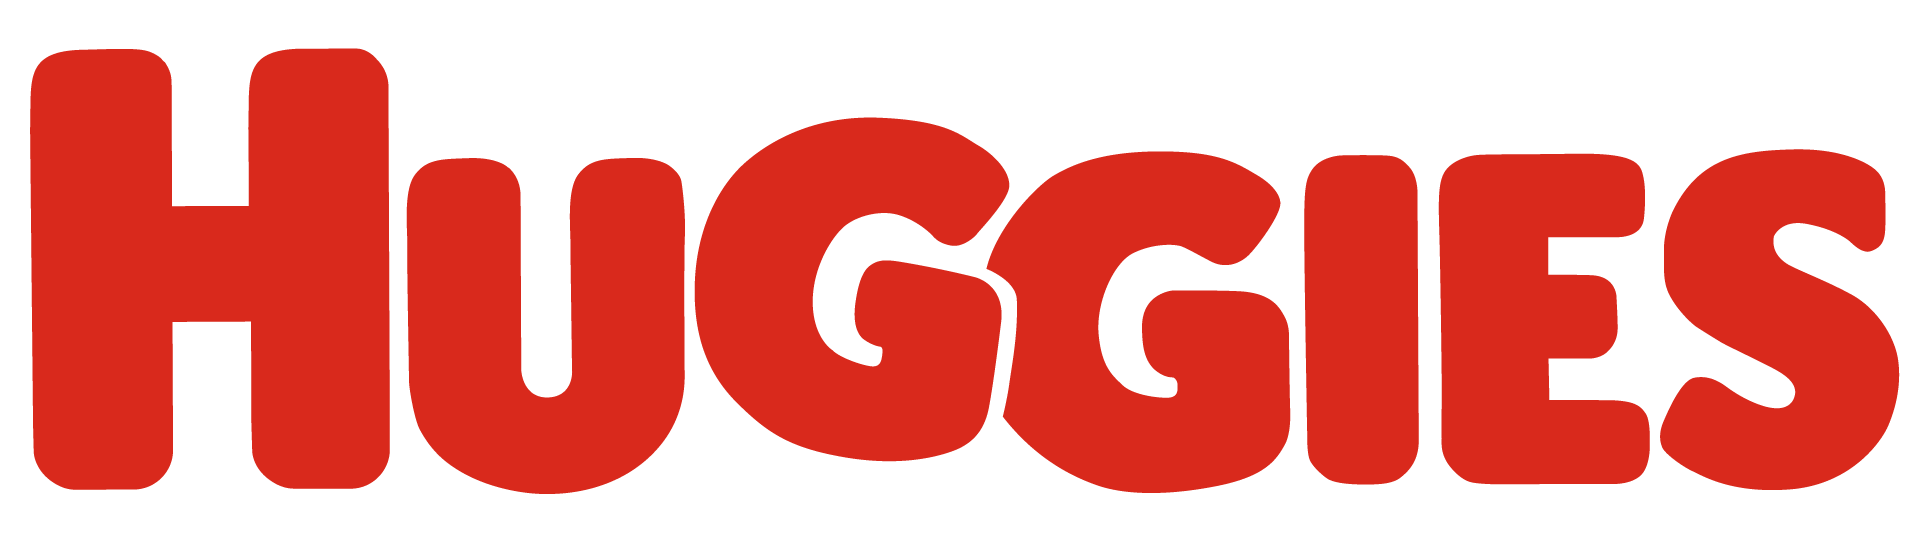 HUGGIES Logo